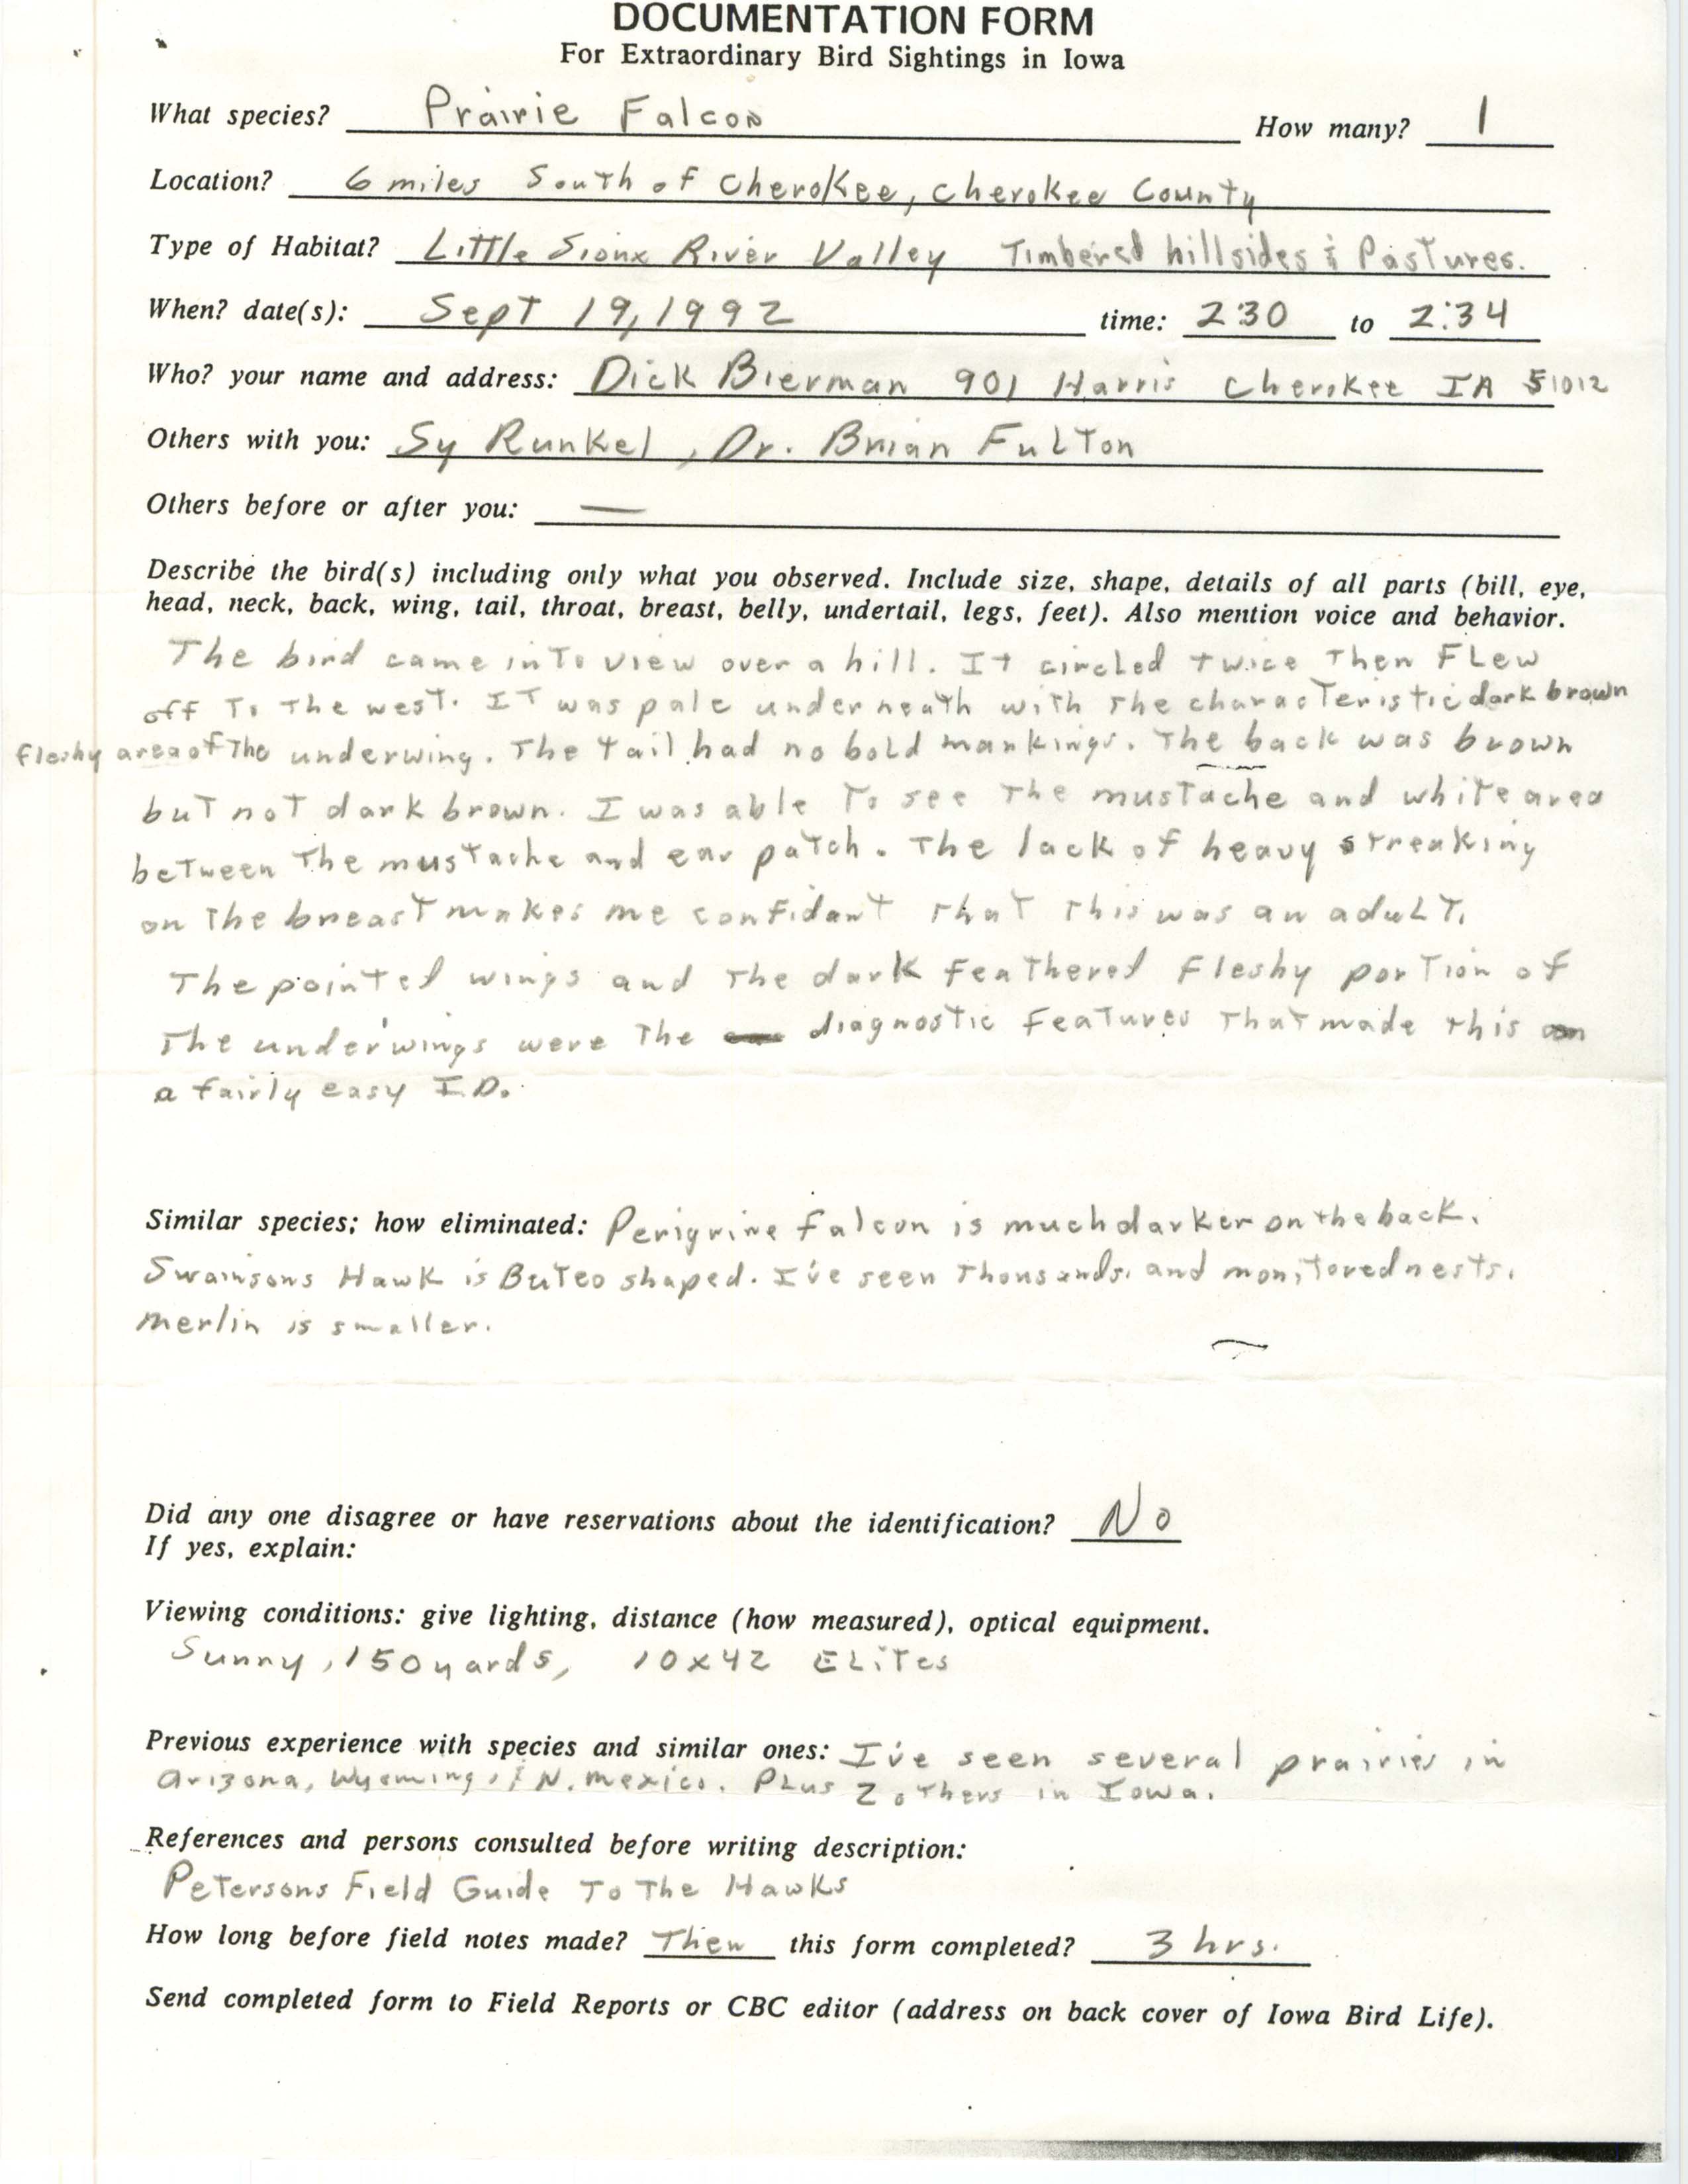 Rare bird documentation form for Prairie Falcon south of Cherokee, 1992